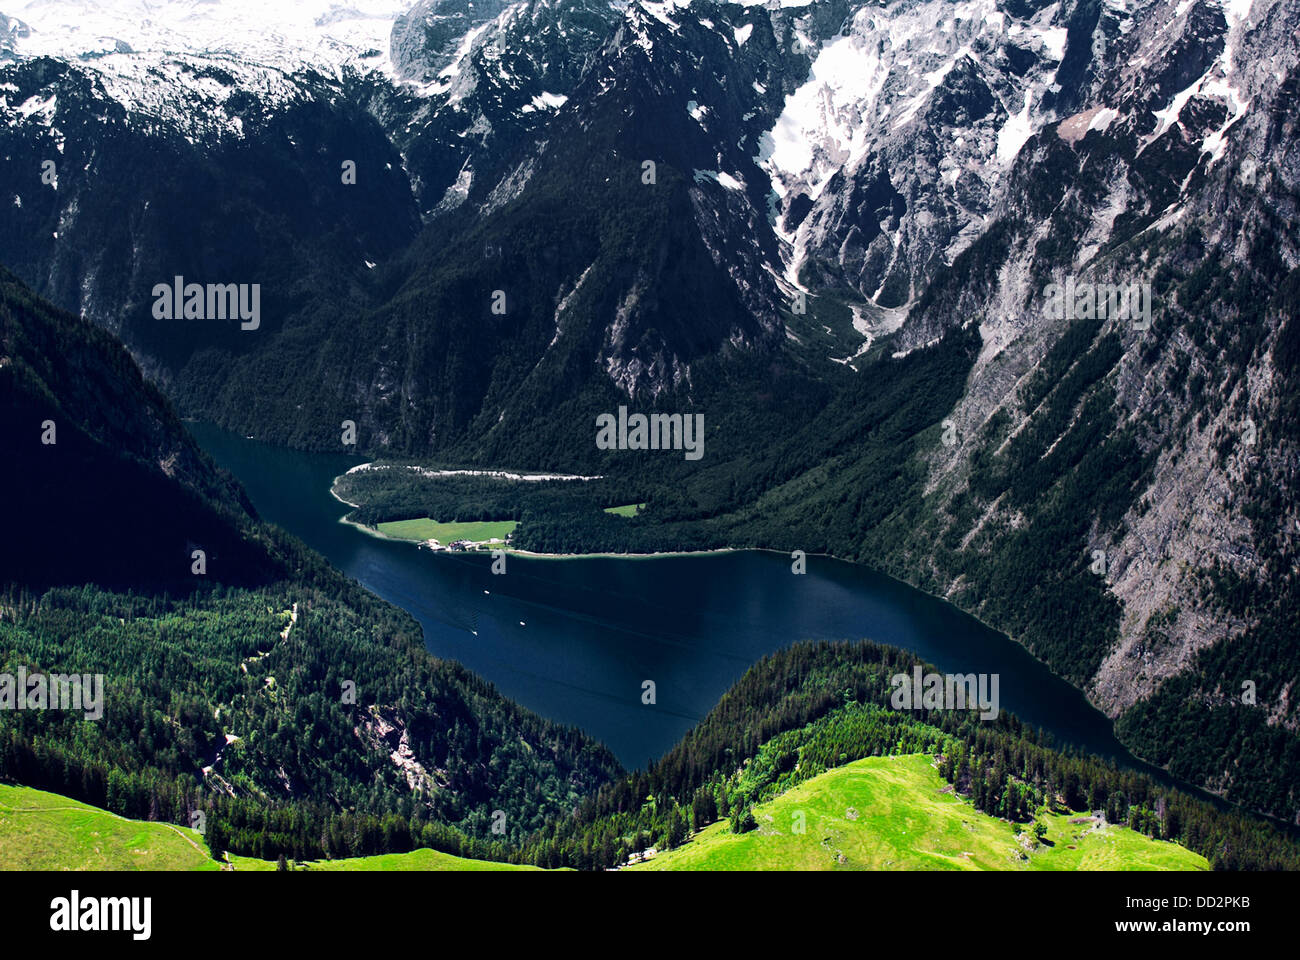 King`s Lake, Koenigssee, Watzmann Eastern Wall, Berchtesgadener Land, Upper Bavaria, Bavaria, Germany Stock Photo